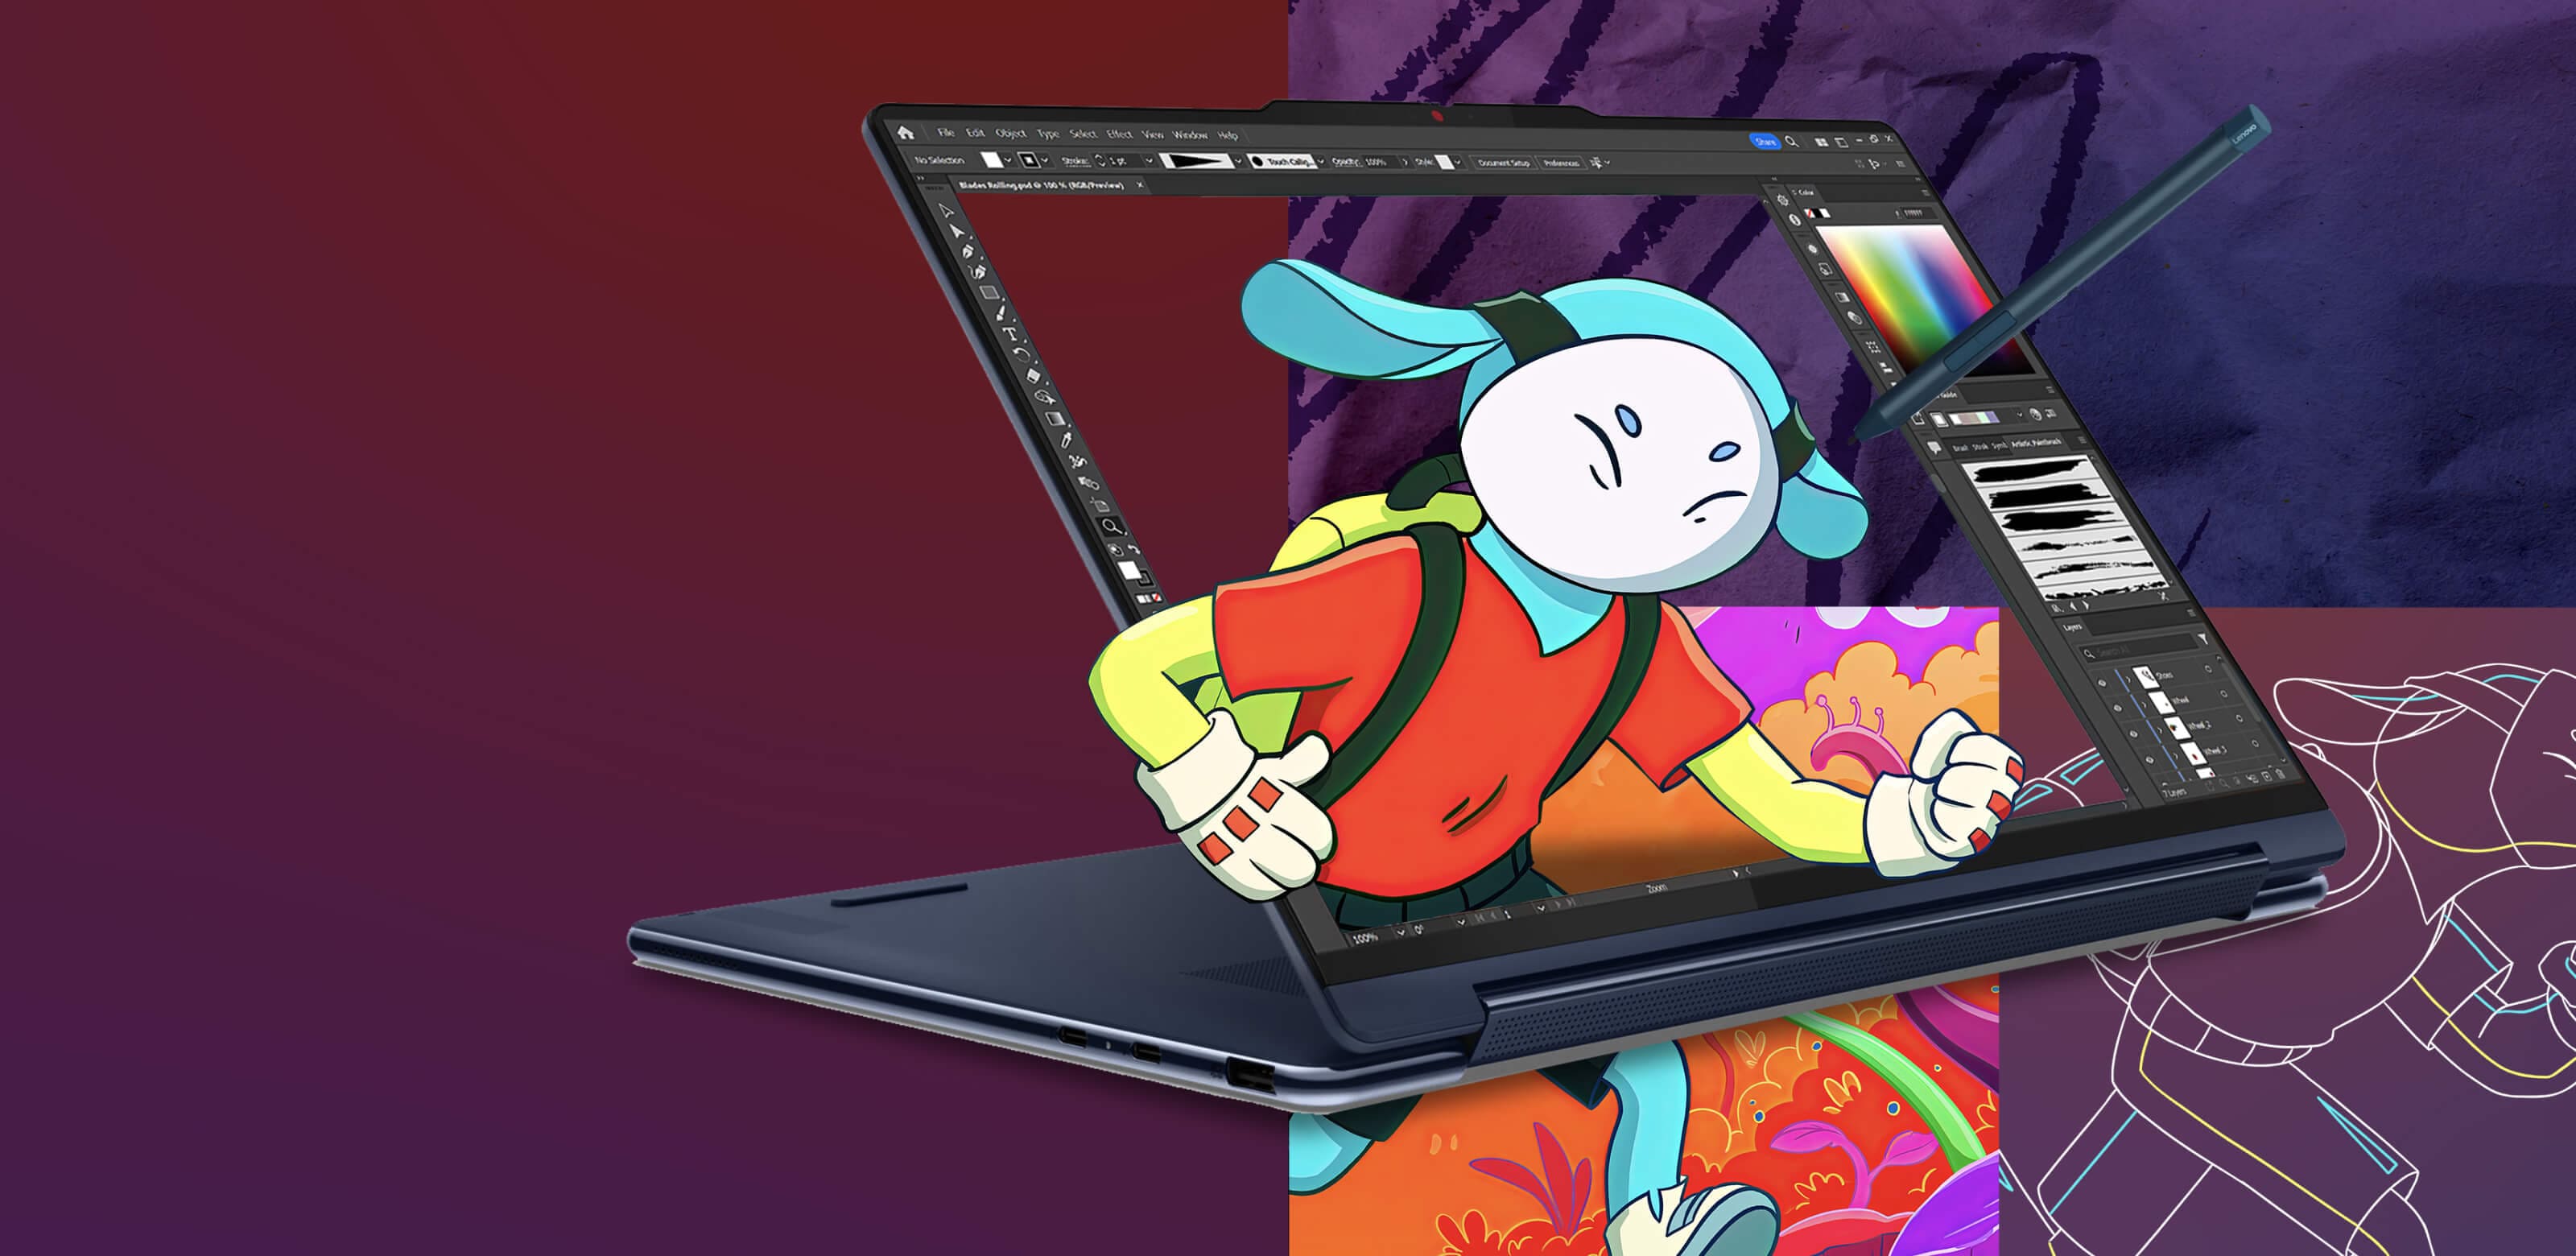 Lenovo Yoga 筆記簿型電腦處於直立模式，屏幕上顯示影像編輯程式，有動畫角色從畫面冒出。